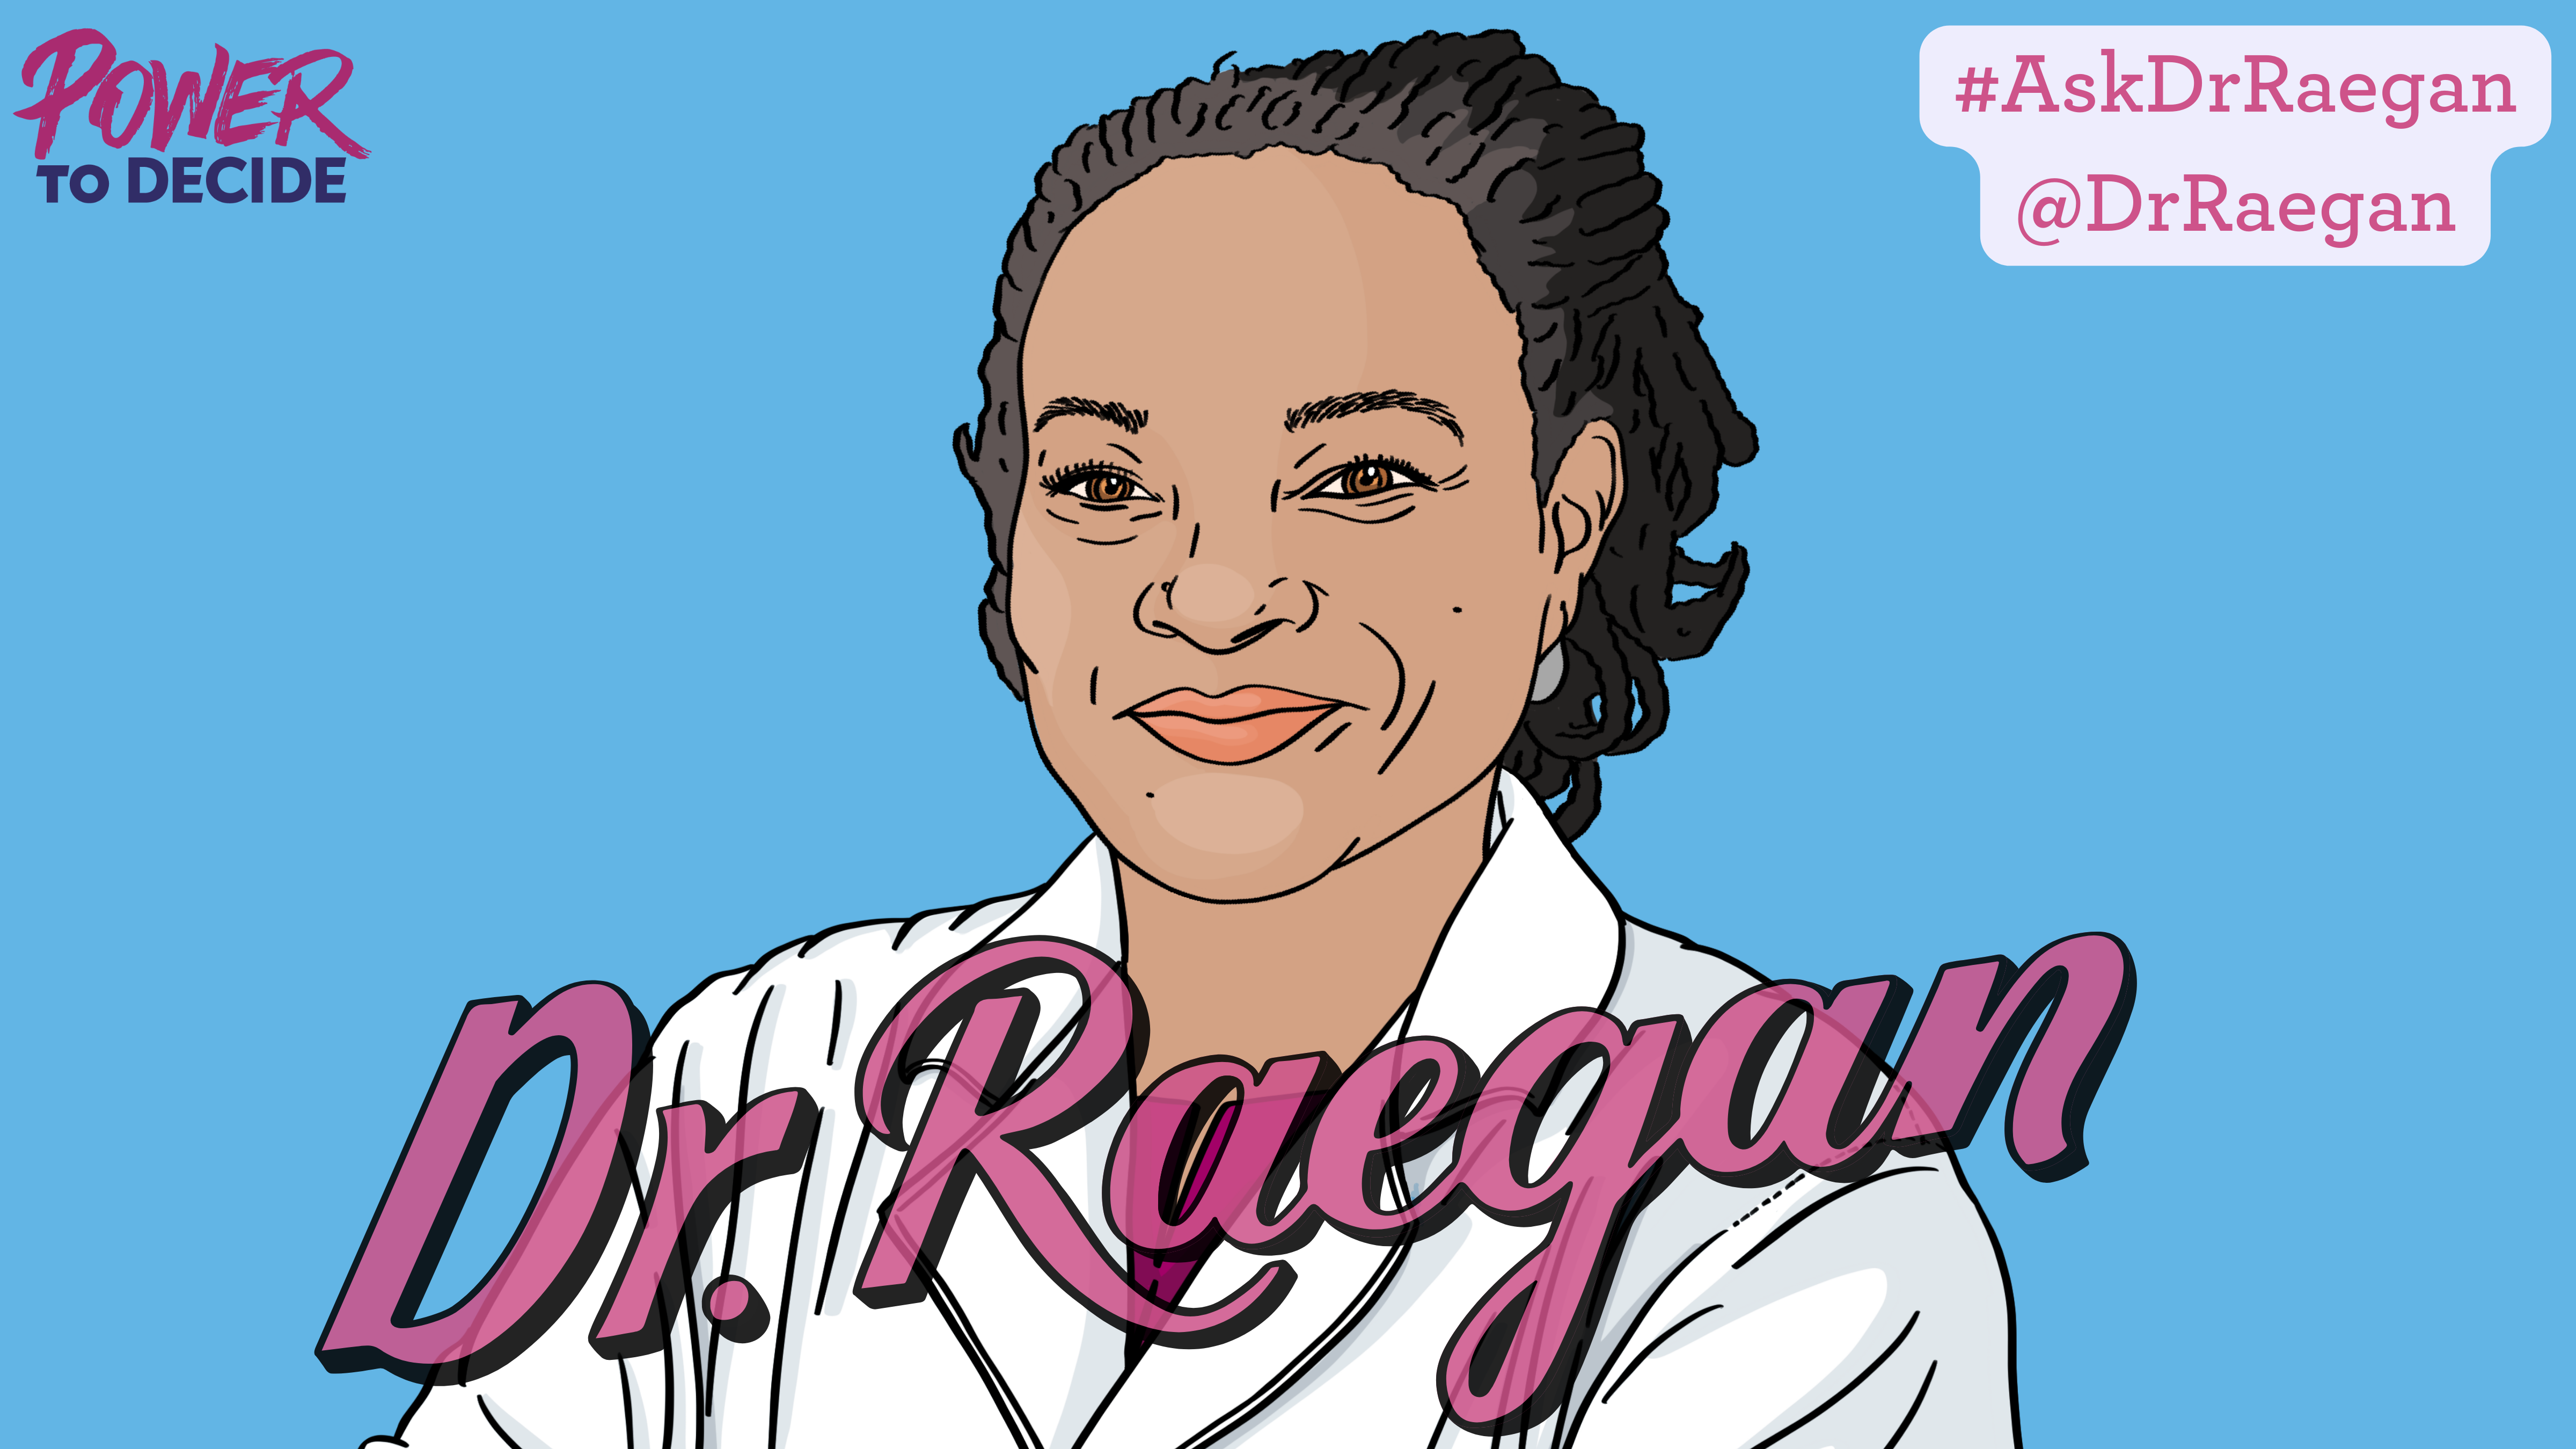 A drawing of Dr. Raegan with the hashtag #AskDrRaegan and handle @DrRaegan.